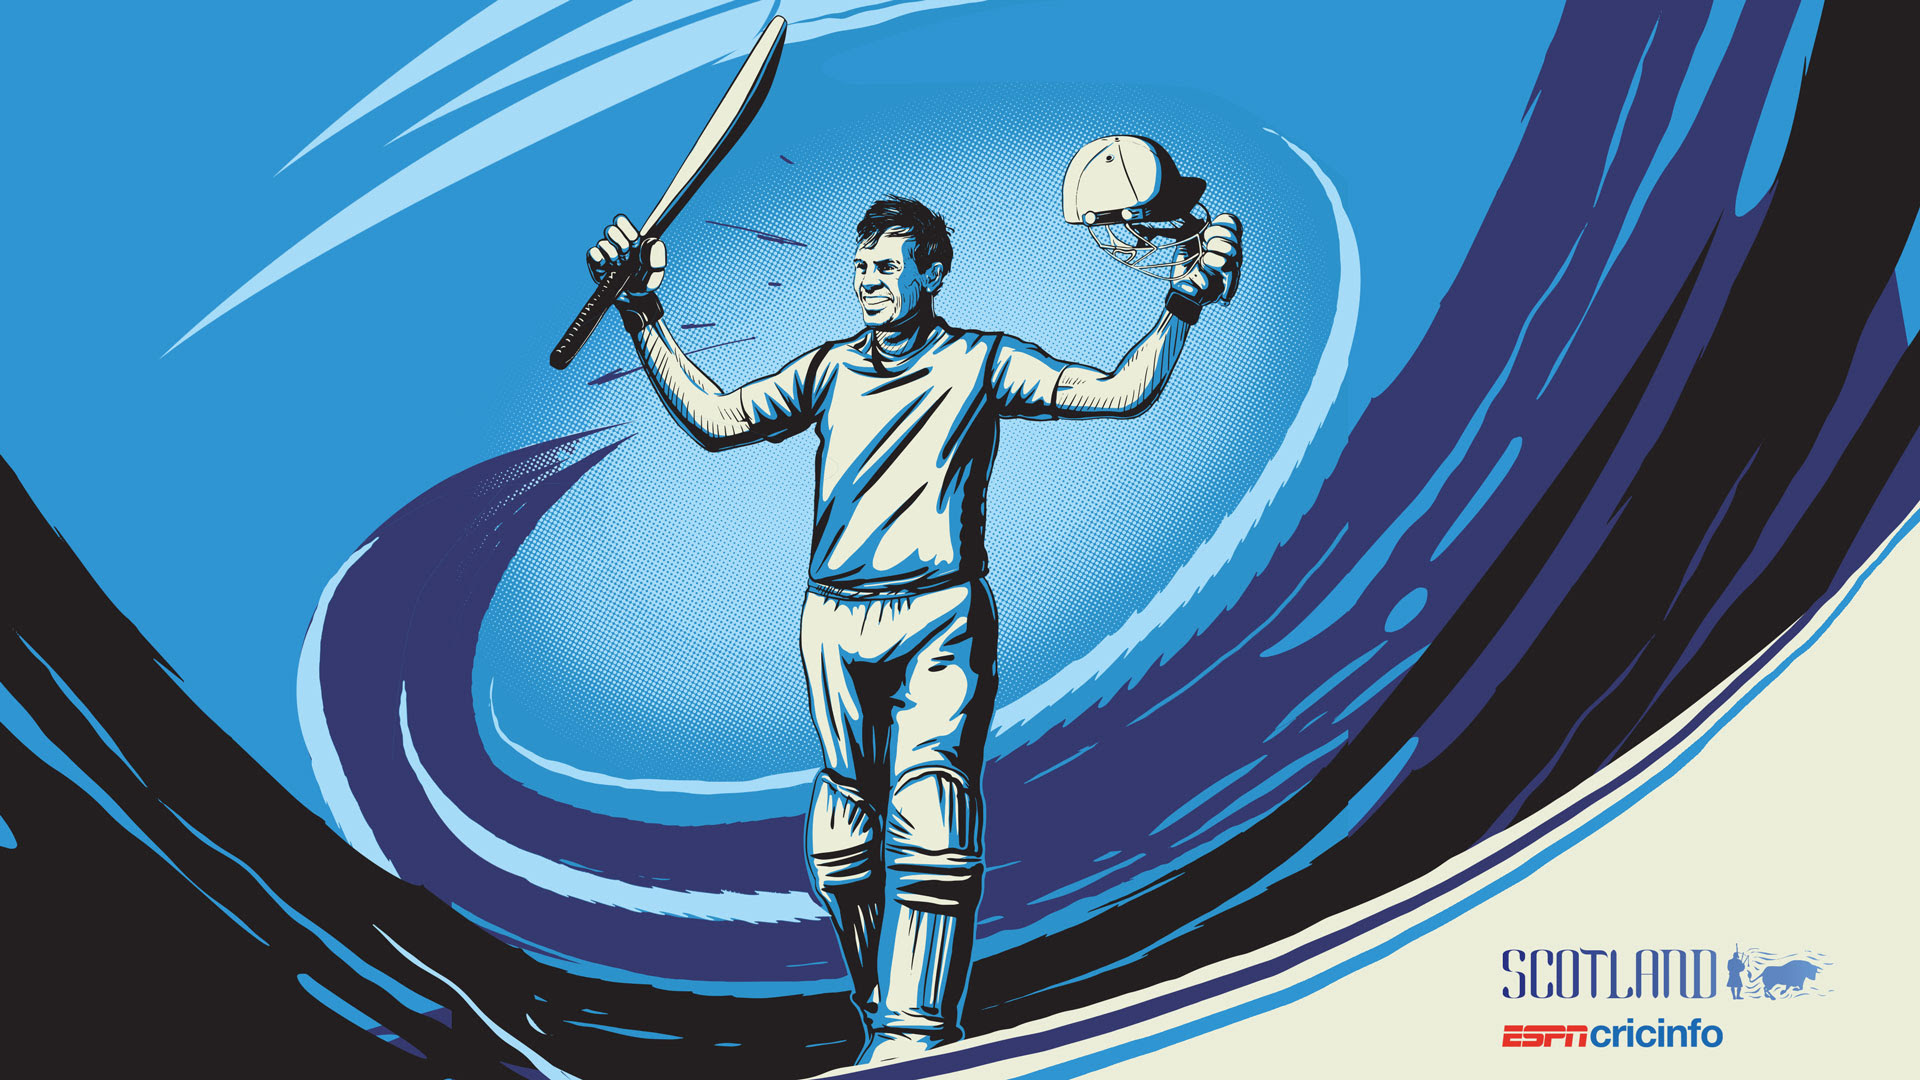 Cricket Cartoon Image HD